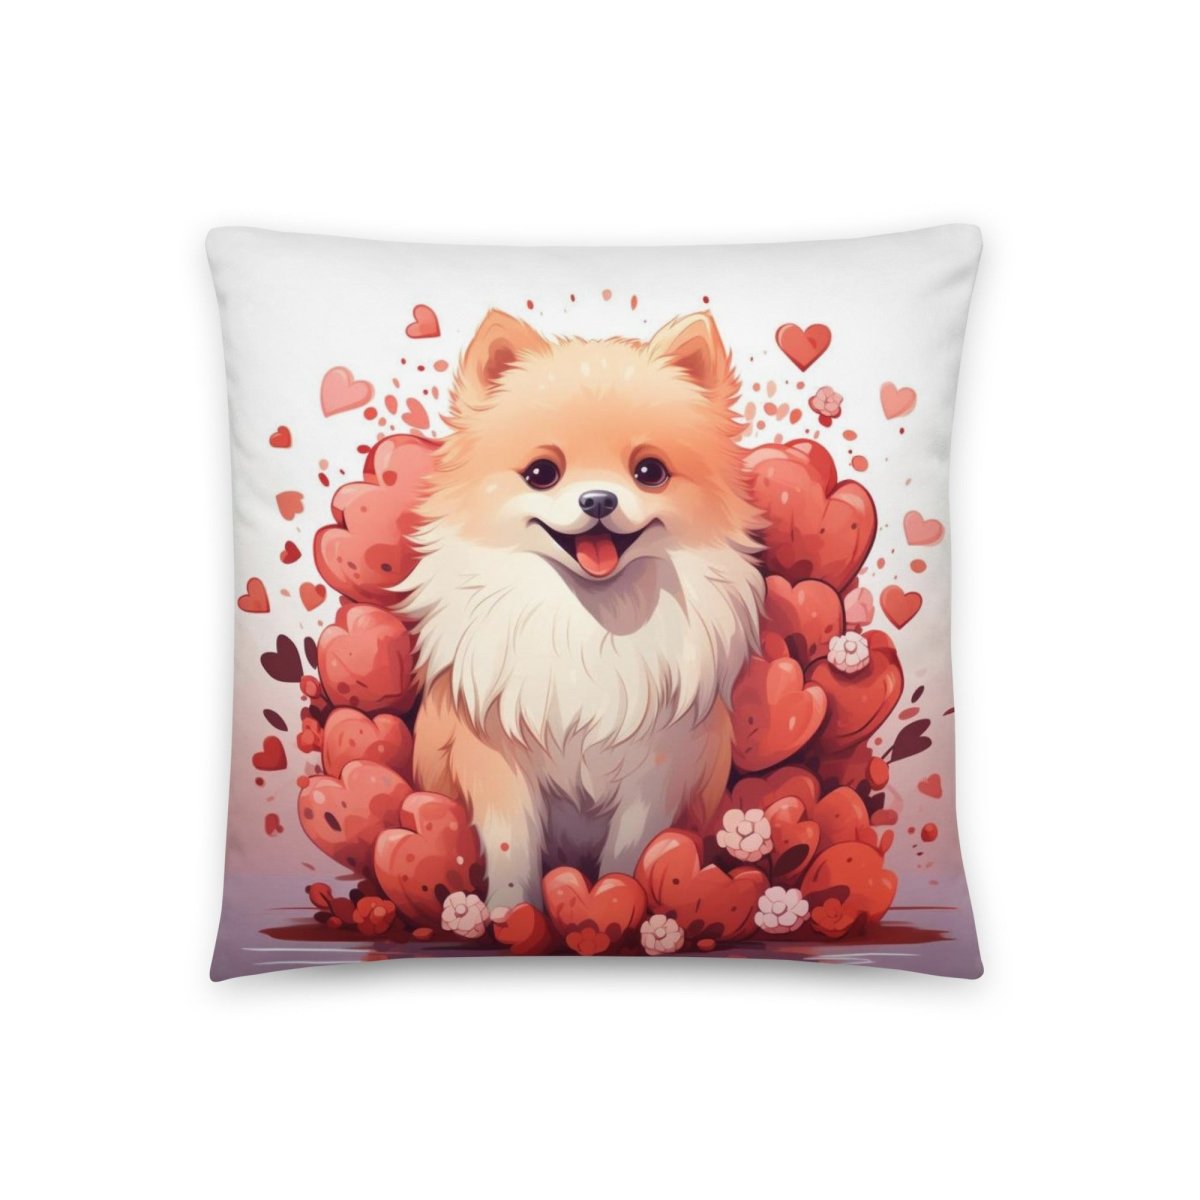 Pomeranian Heart Throw Pillow - Funny Nikko